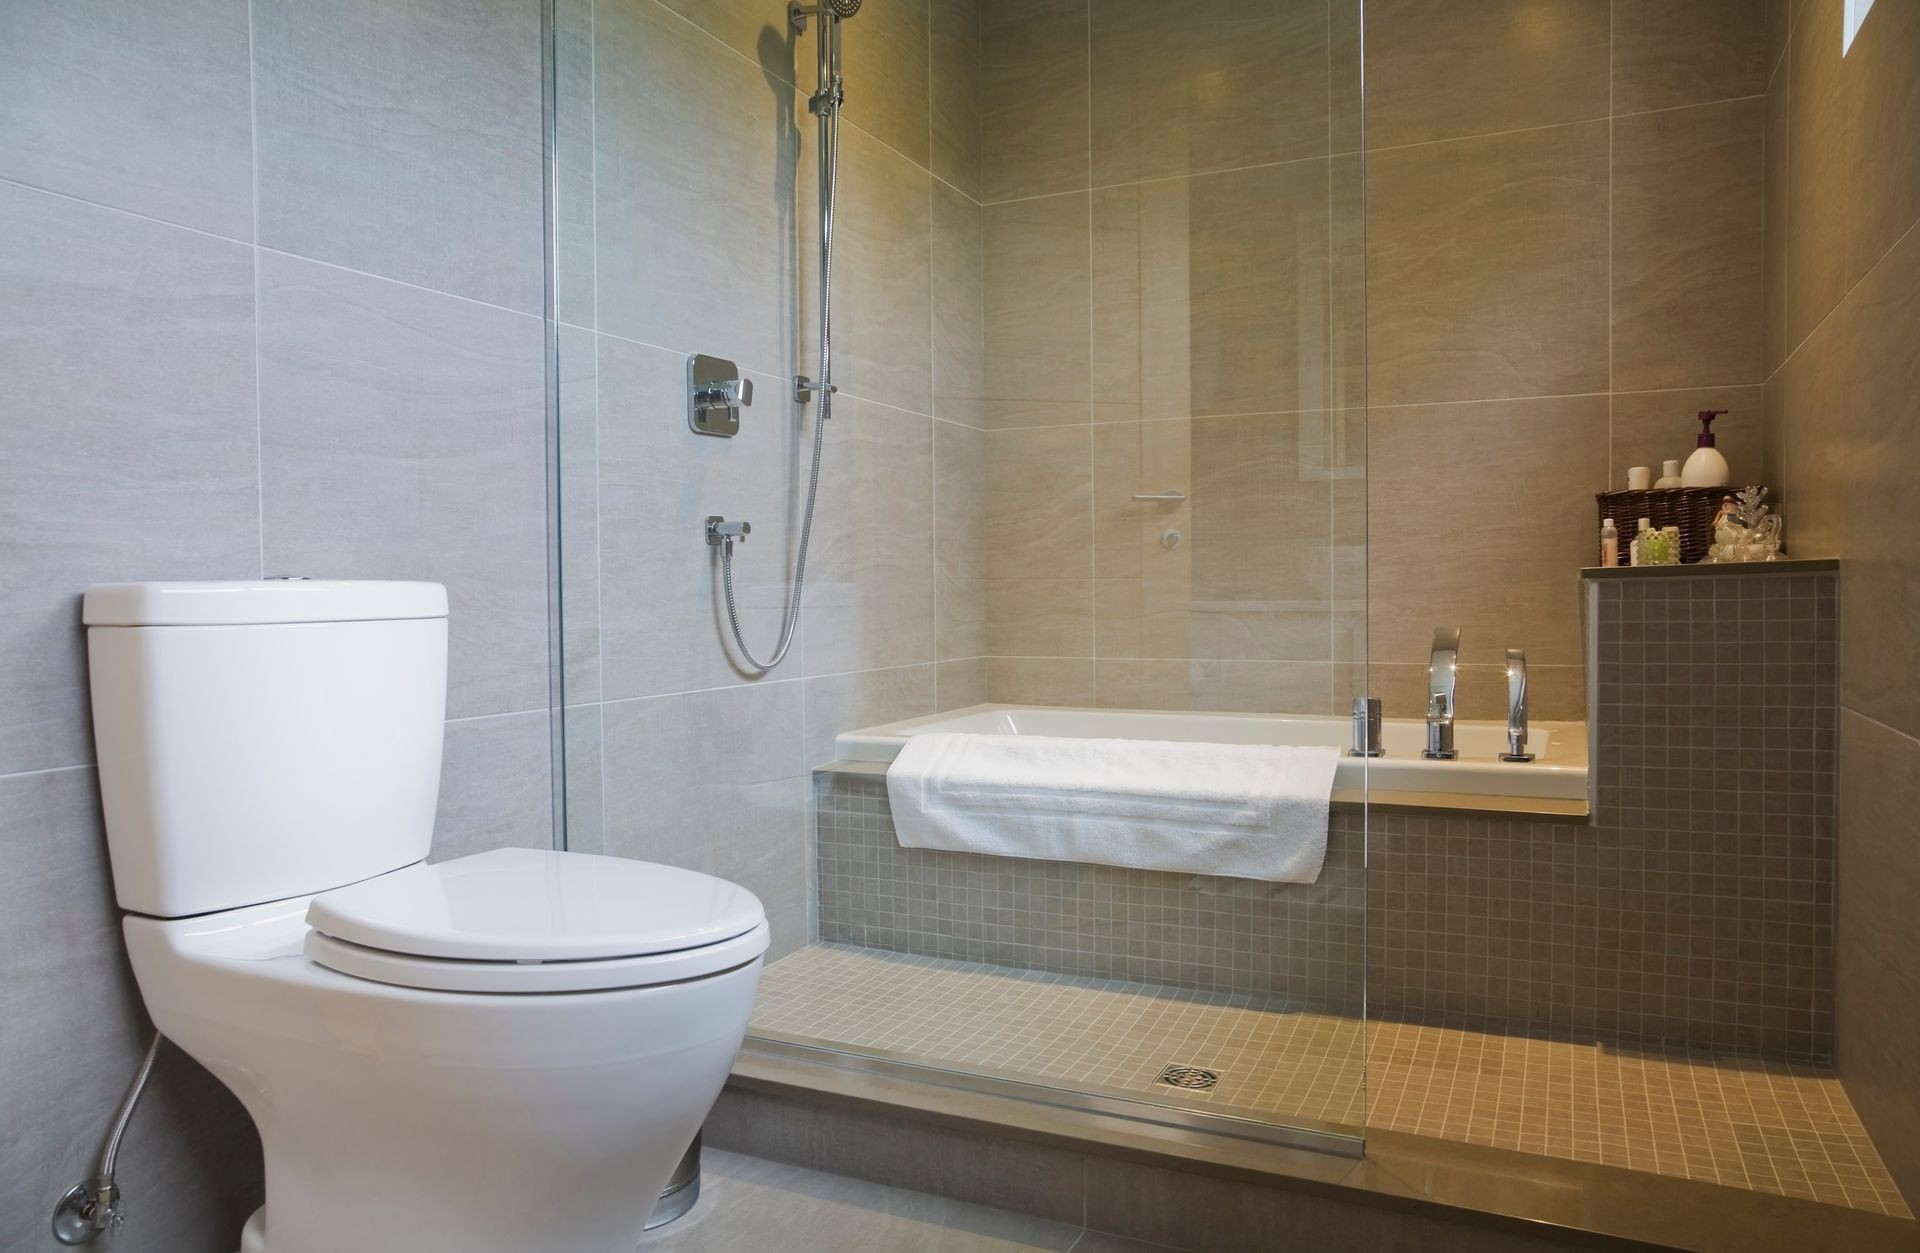 Modern bathroom with bath tub, toilet and glass shower screen